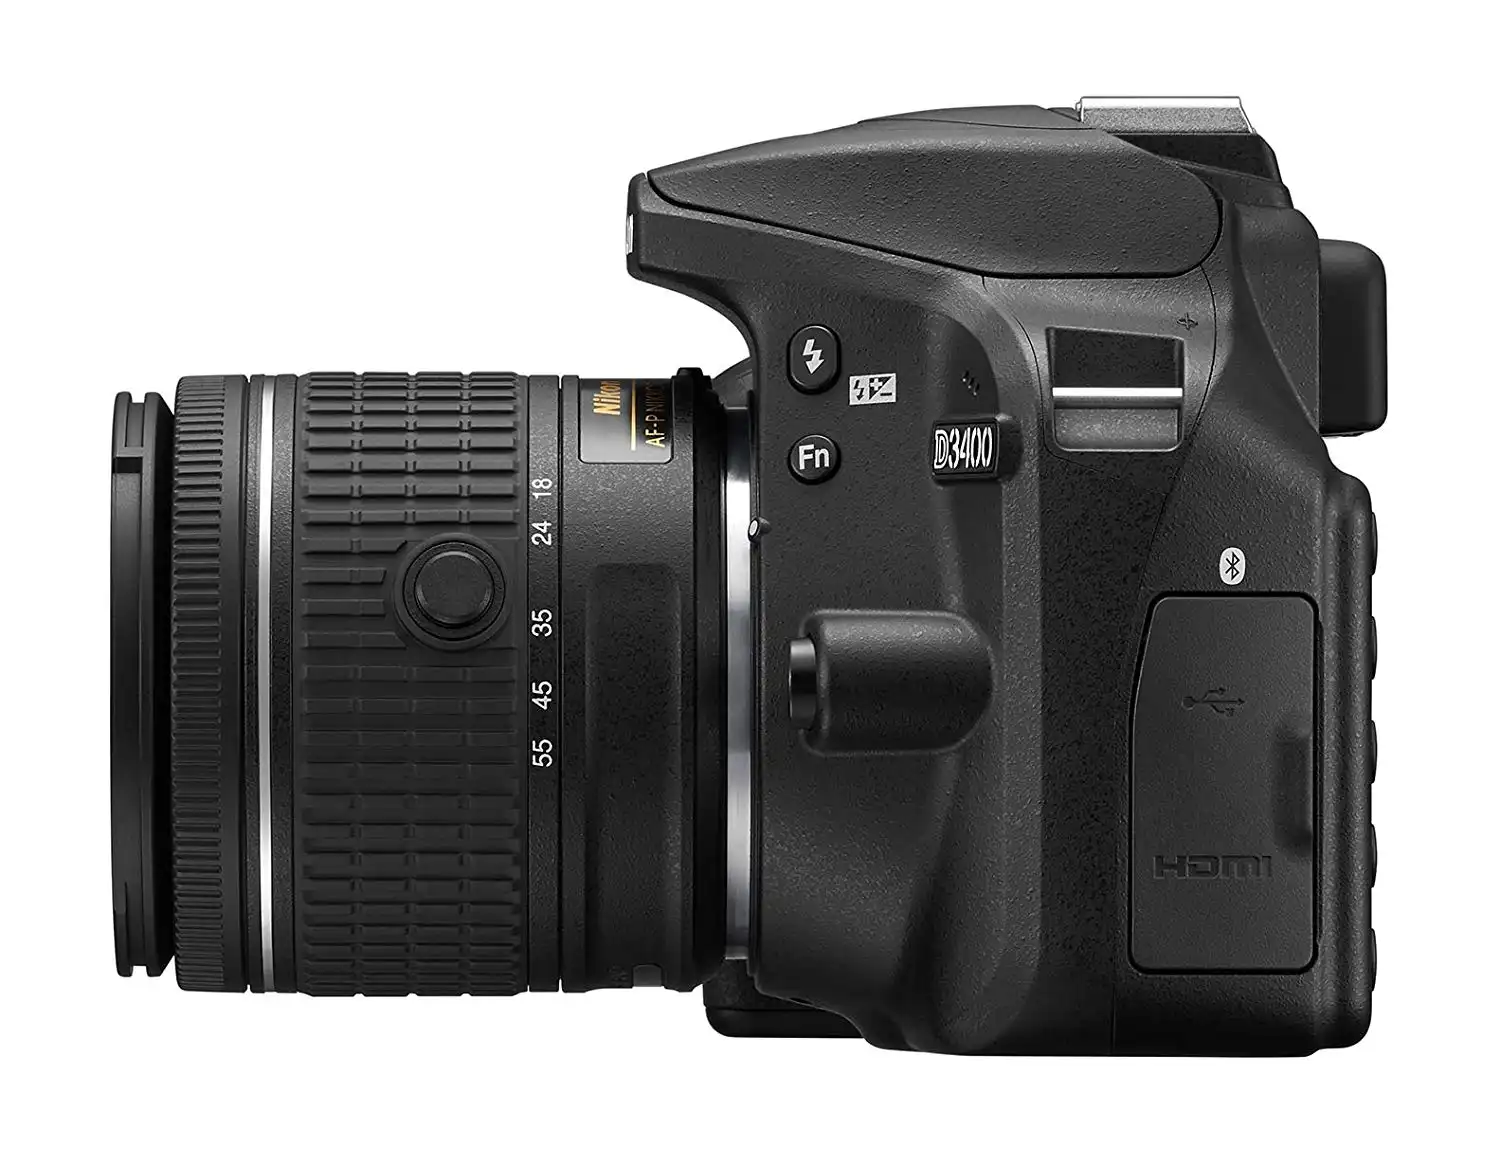 Nikon D3400 review: Still a great budget DSLR